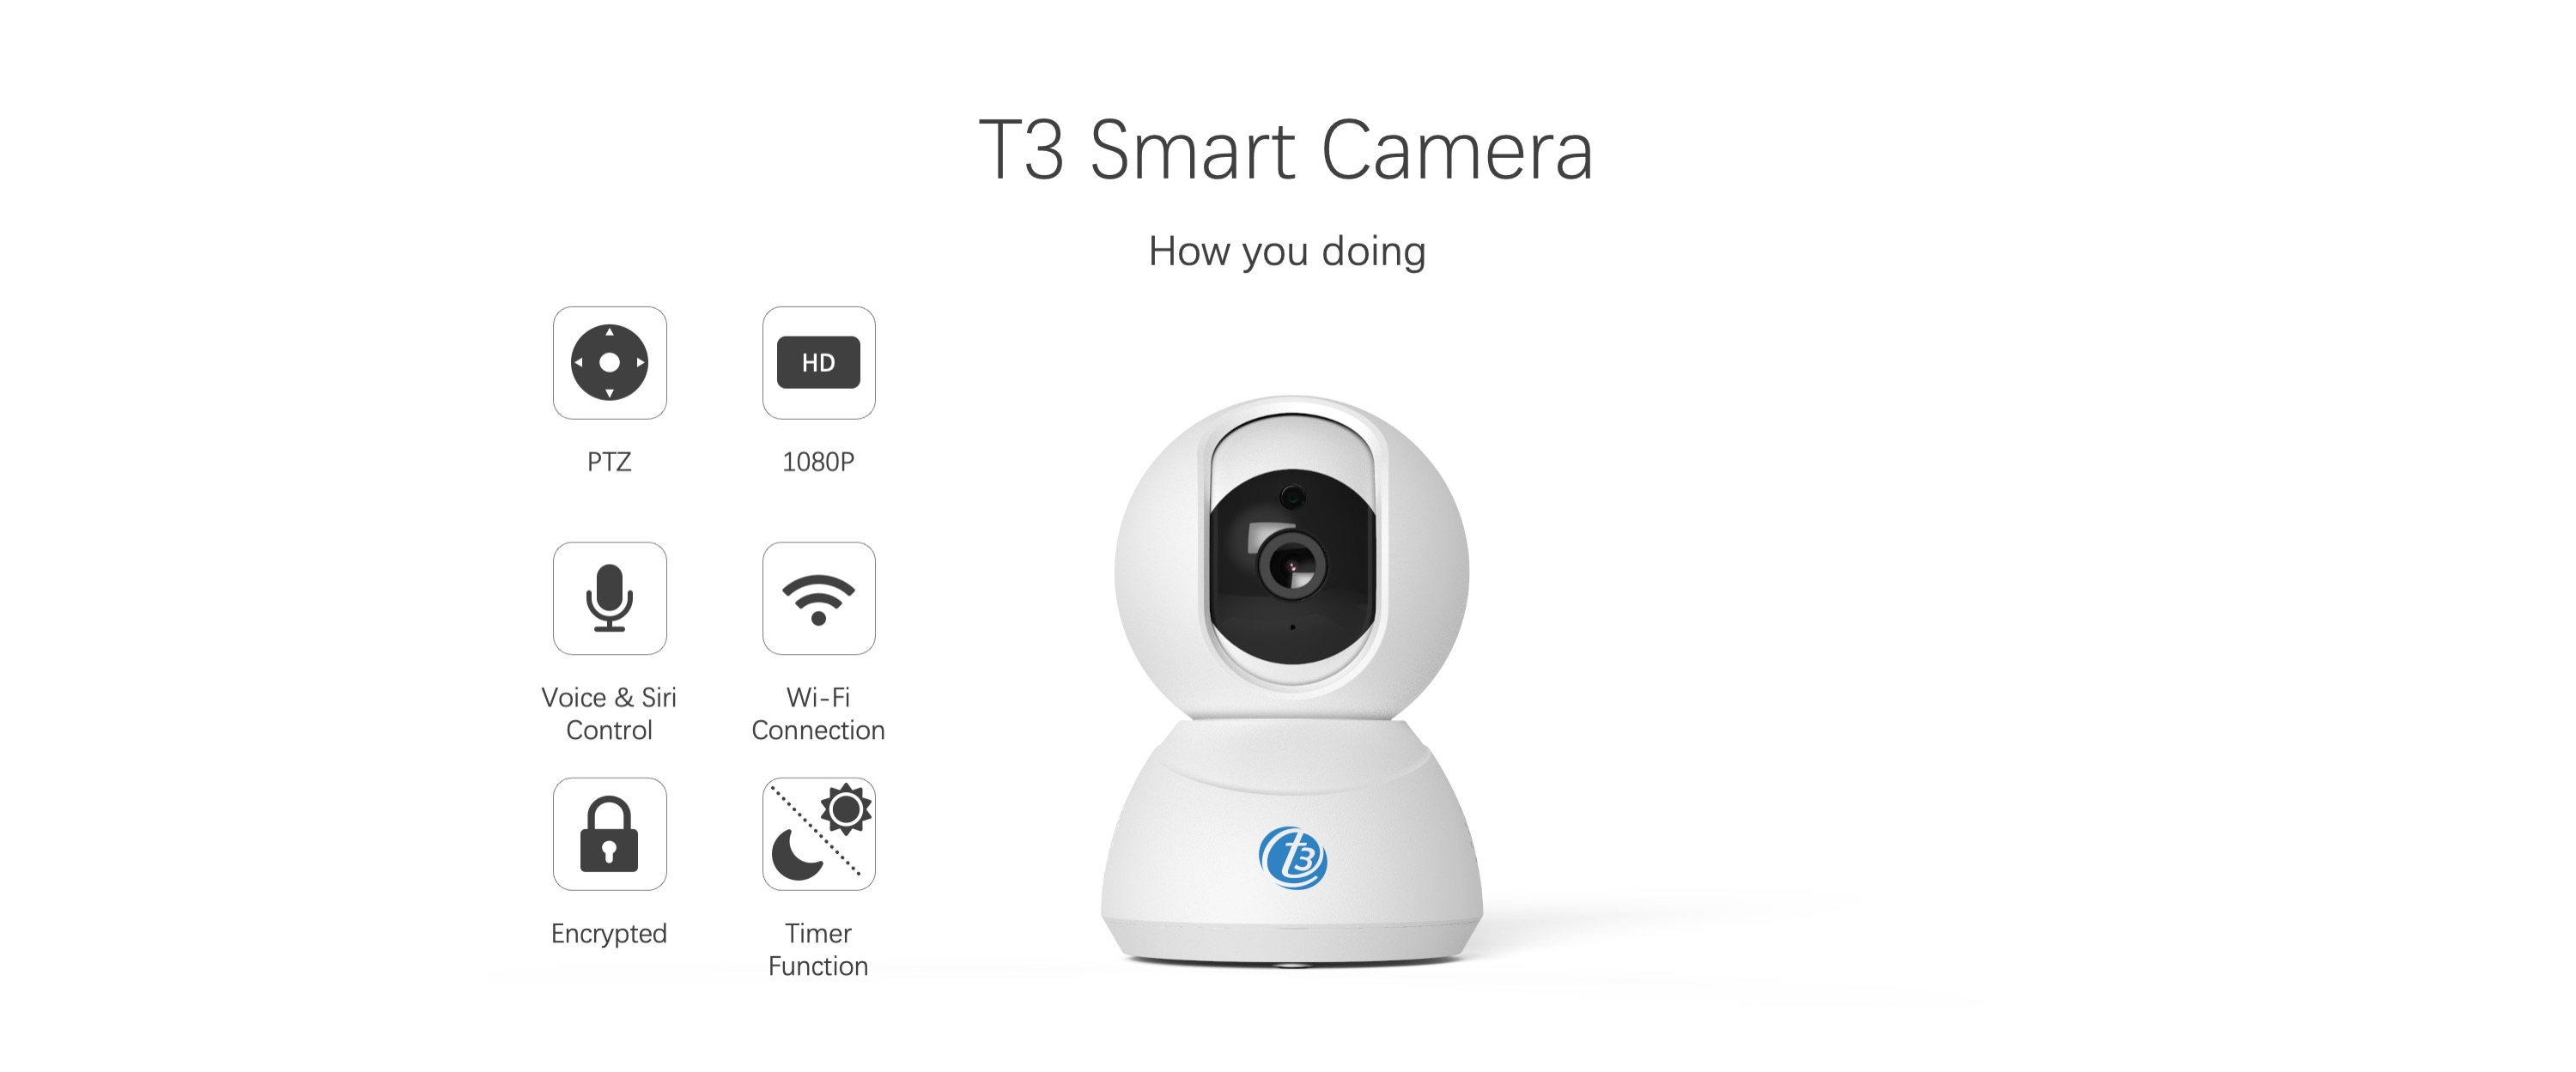 T3 Smart Camera